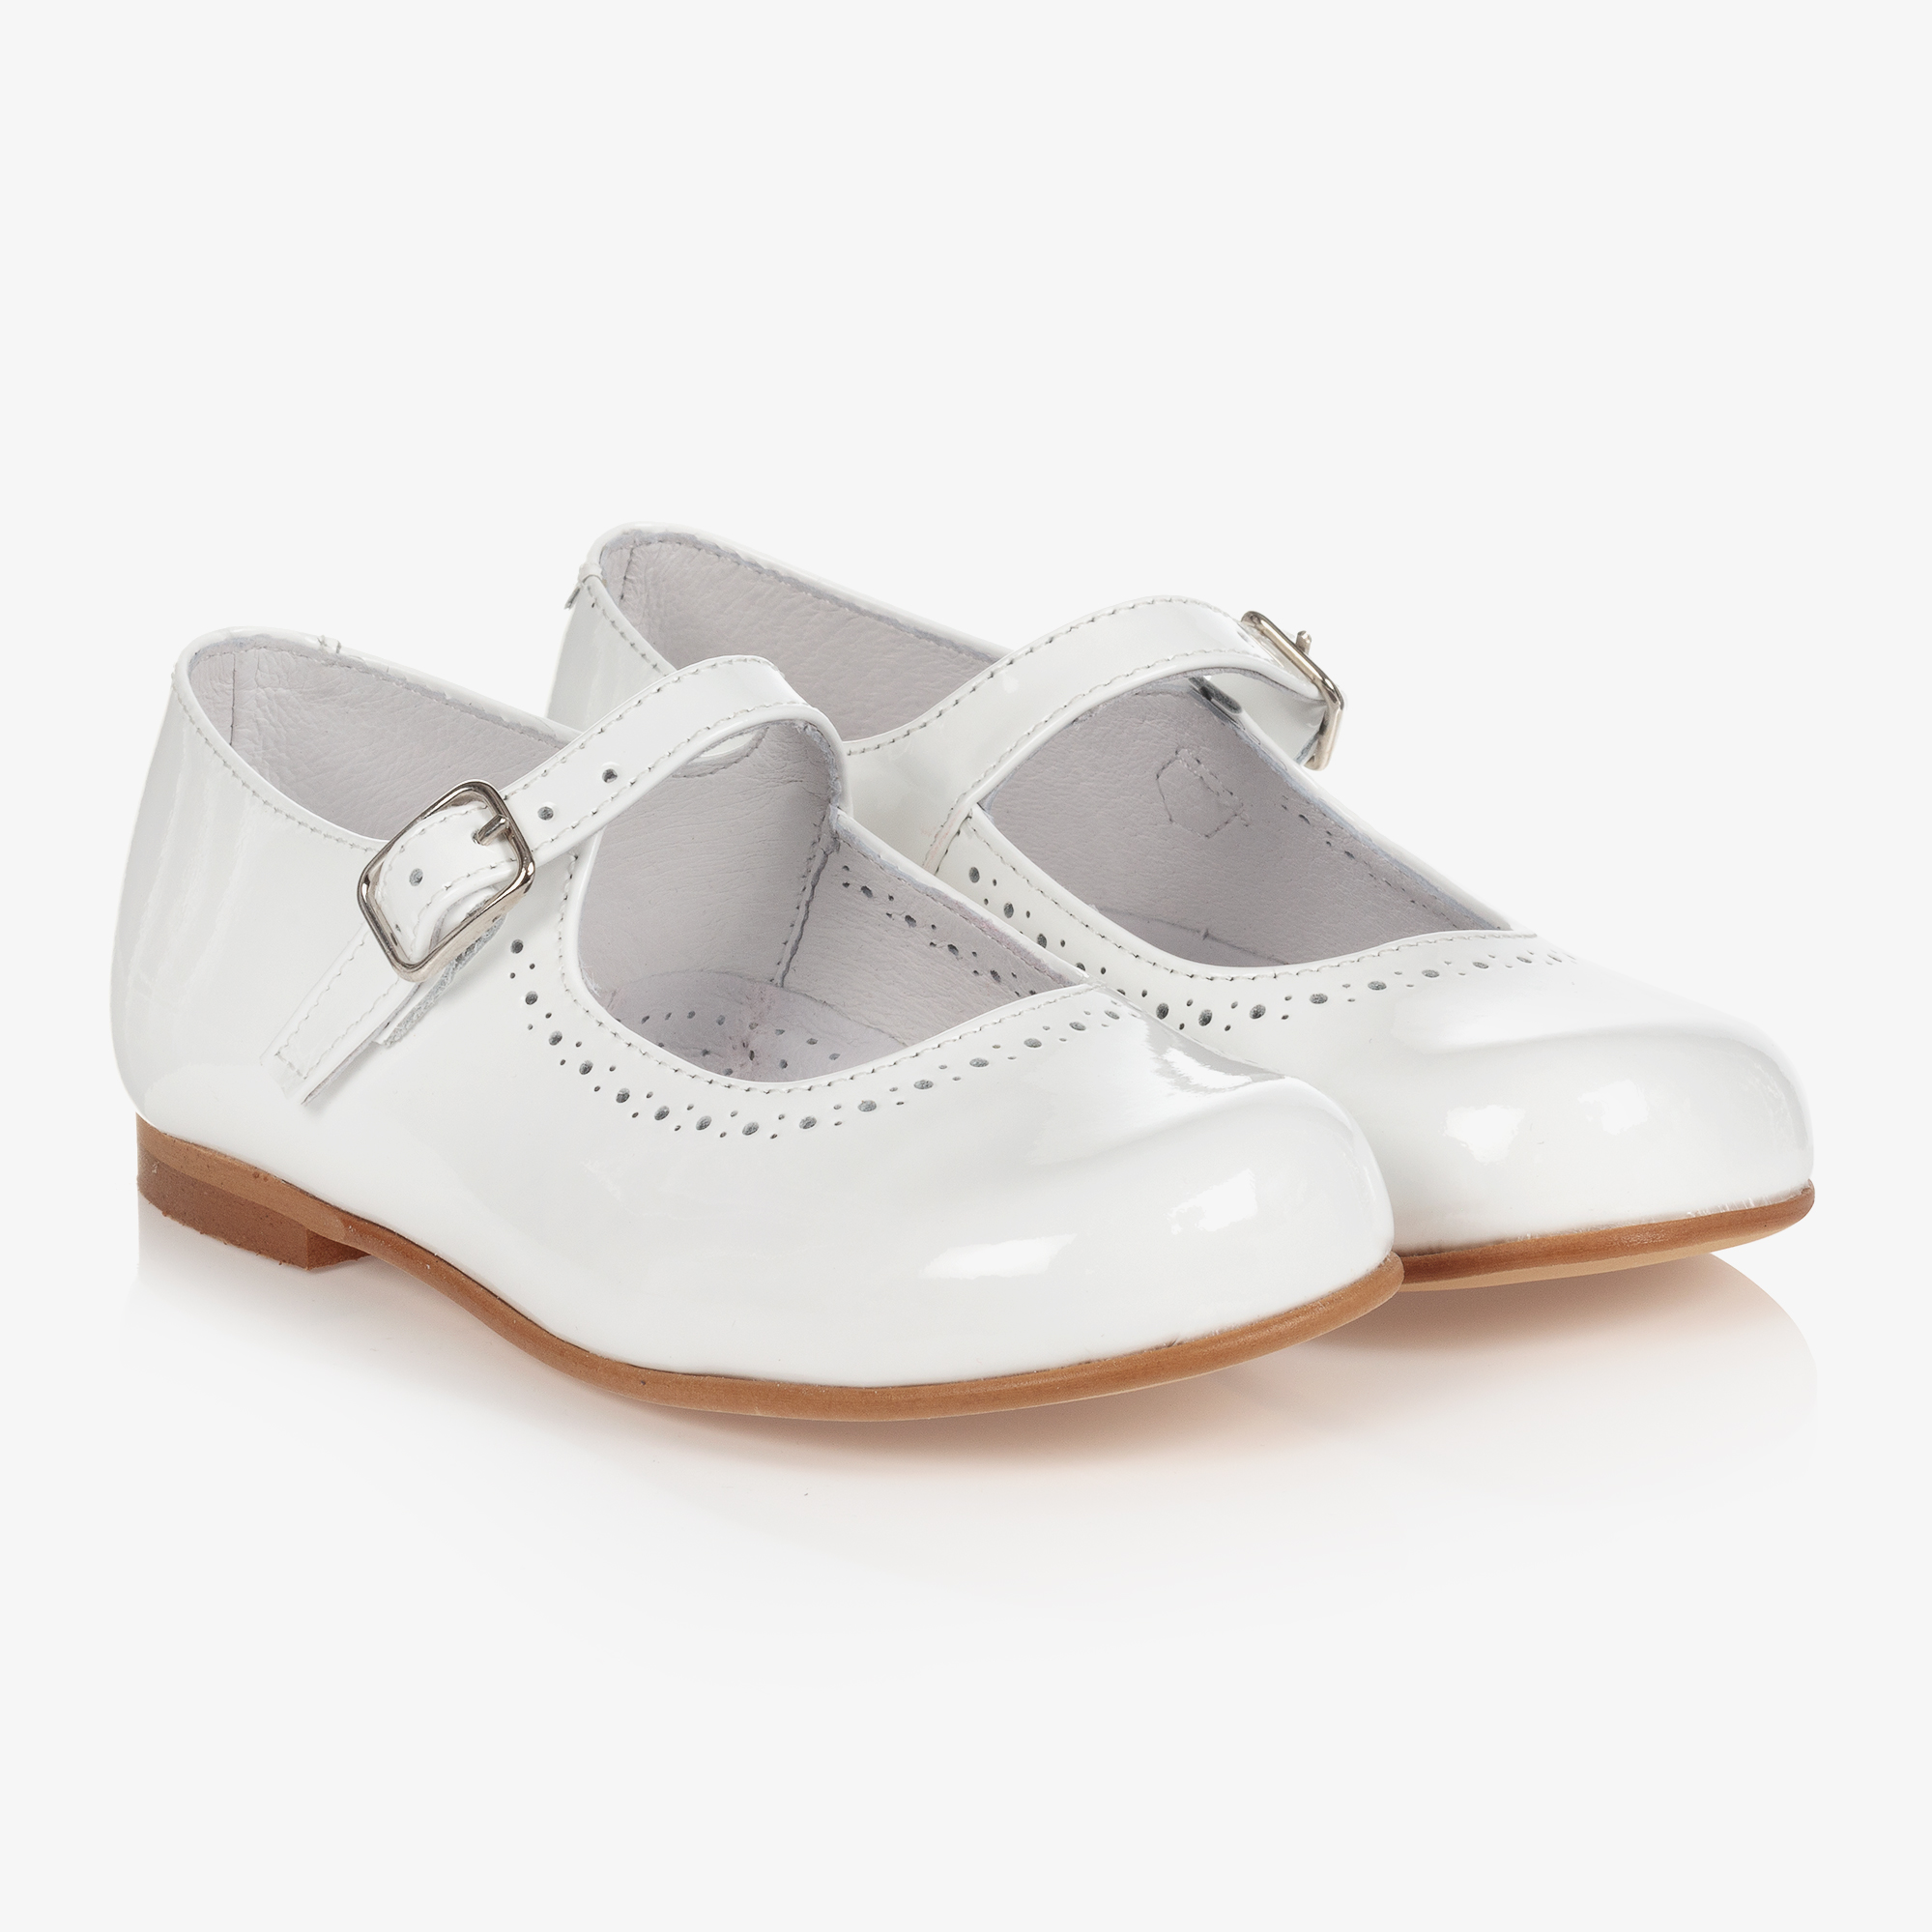 STELLE Girls Mary Jane Shoes Slip-on Party Dress Flat (12ML, White) :  Amazon.in: Fashion